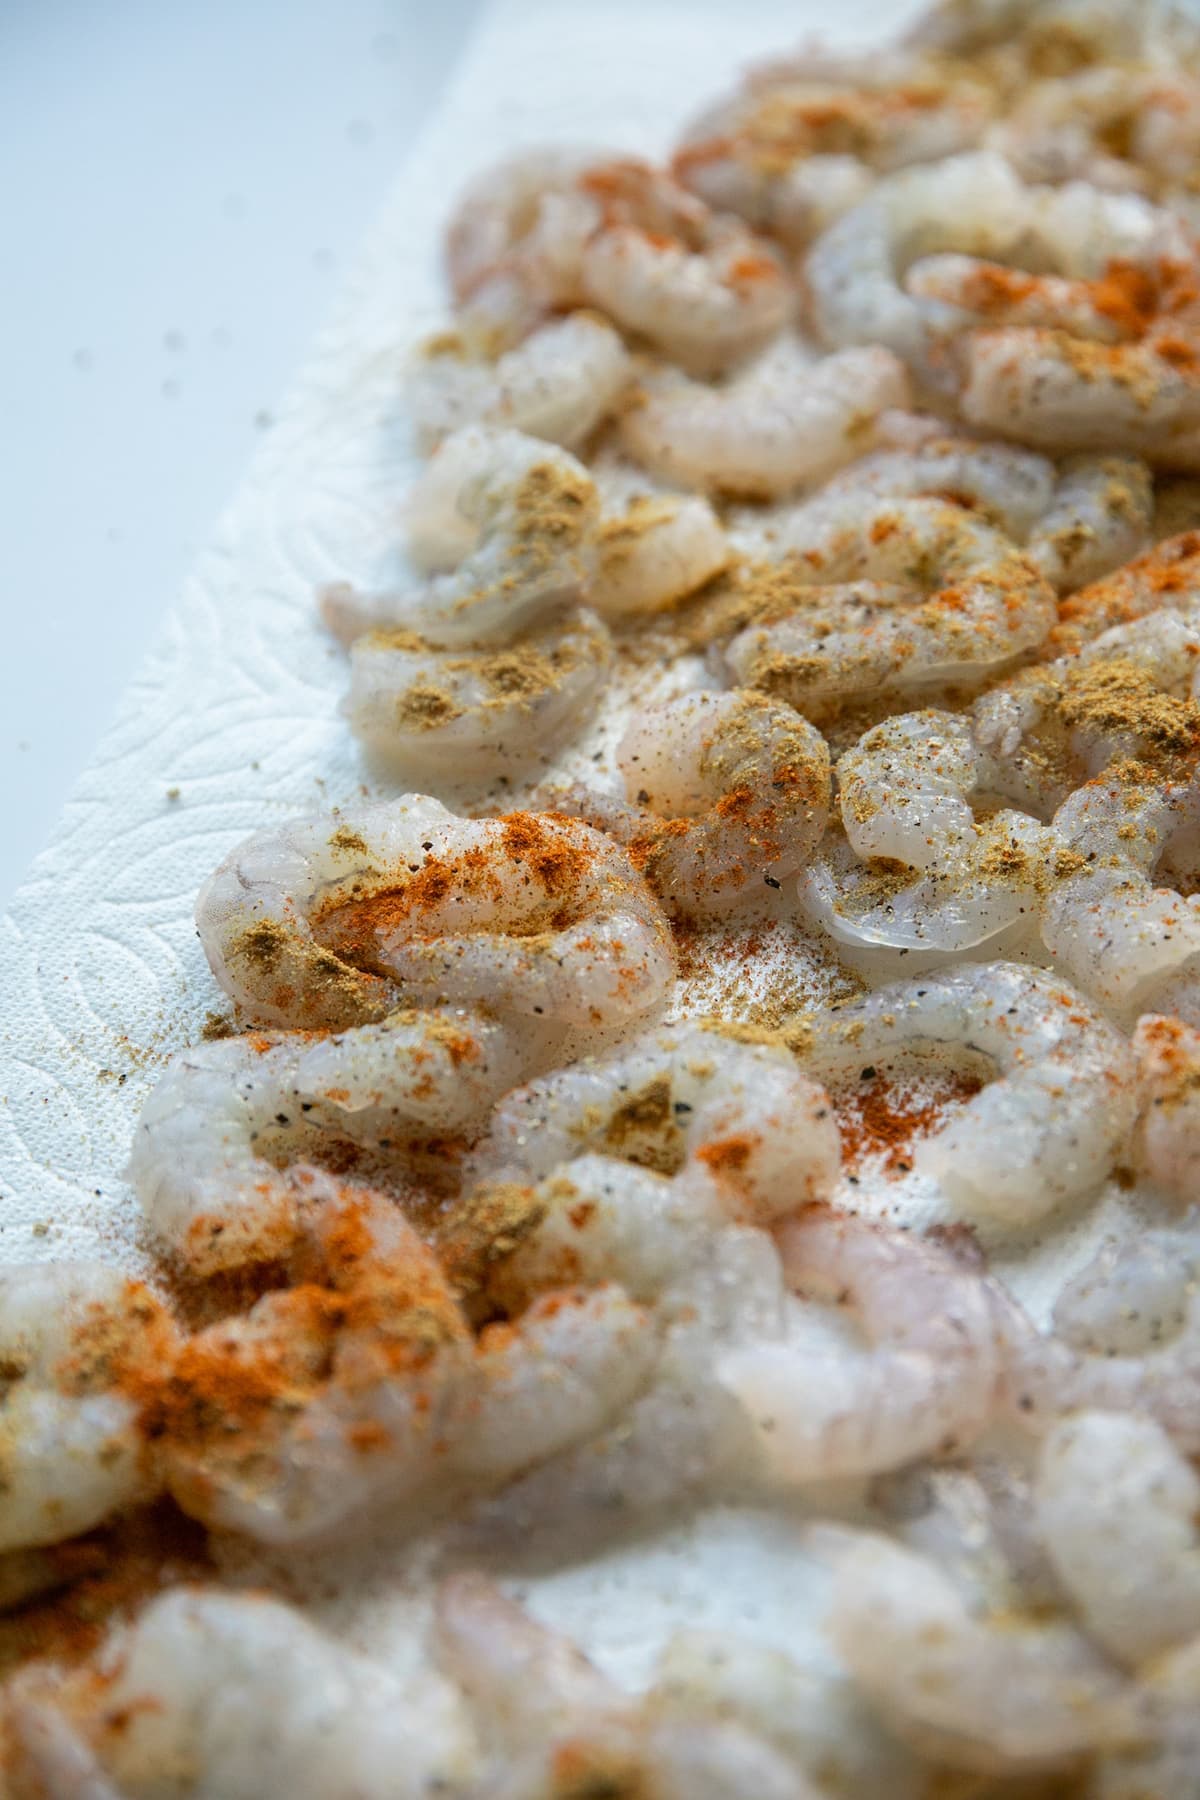 raw shrimp with seasonings